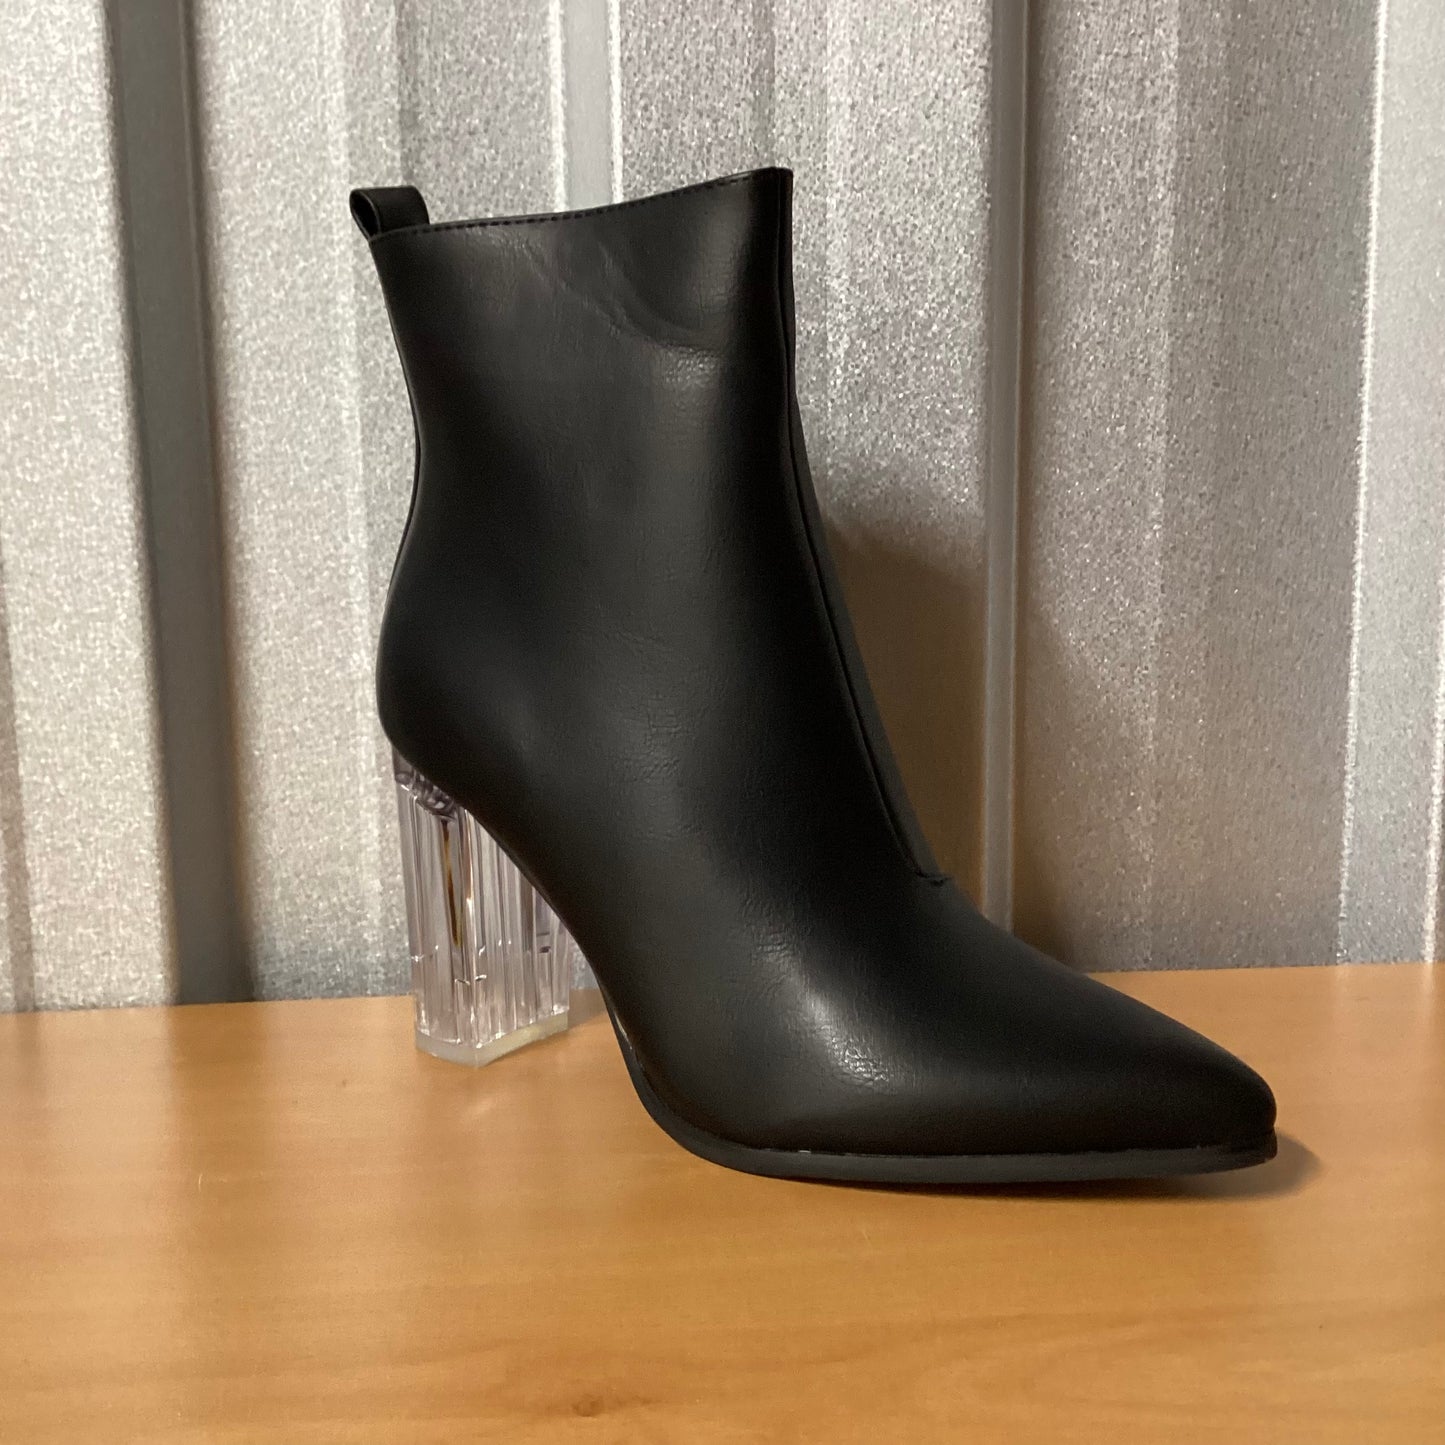 Clear heel boot